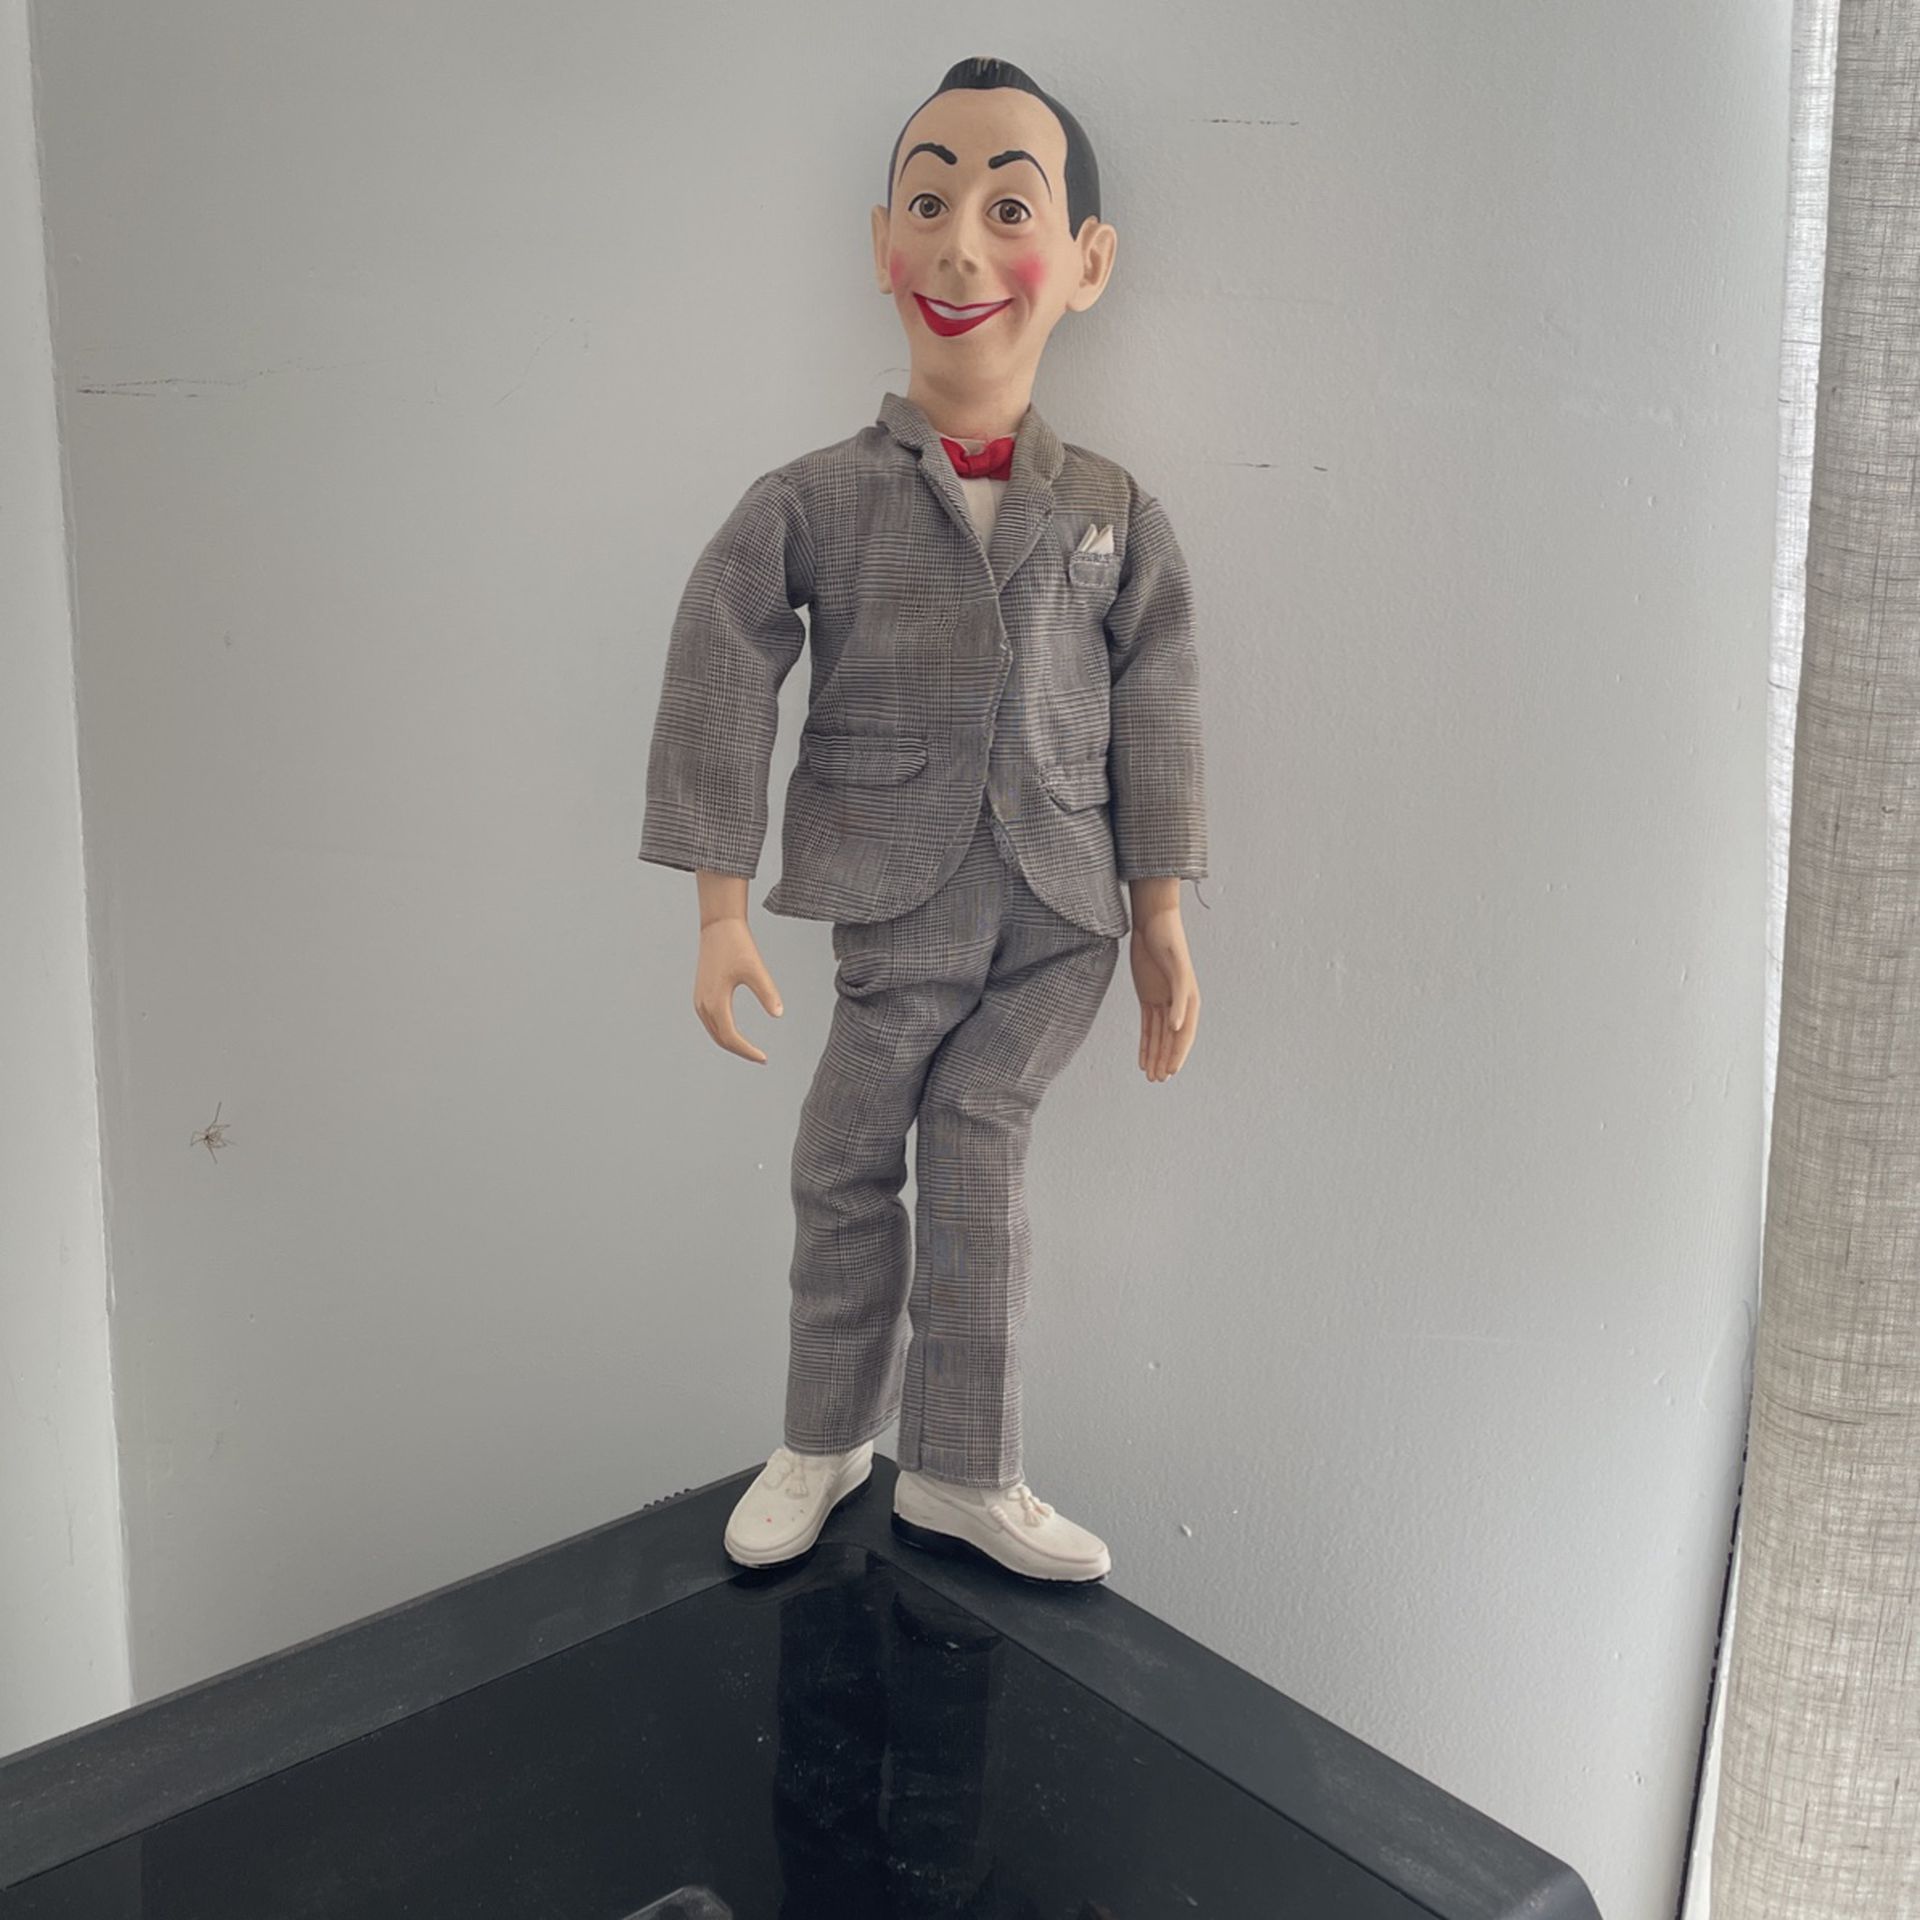 Pee-Wee Herman Ventriloquist Doll